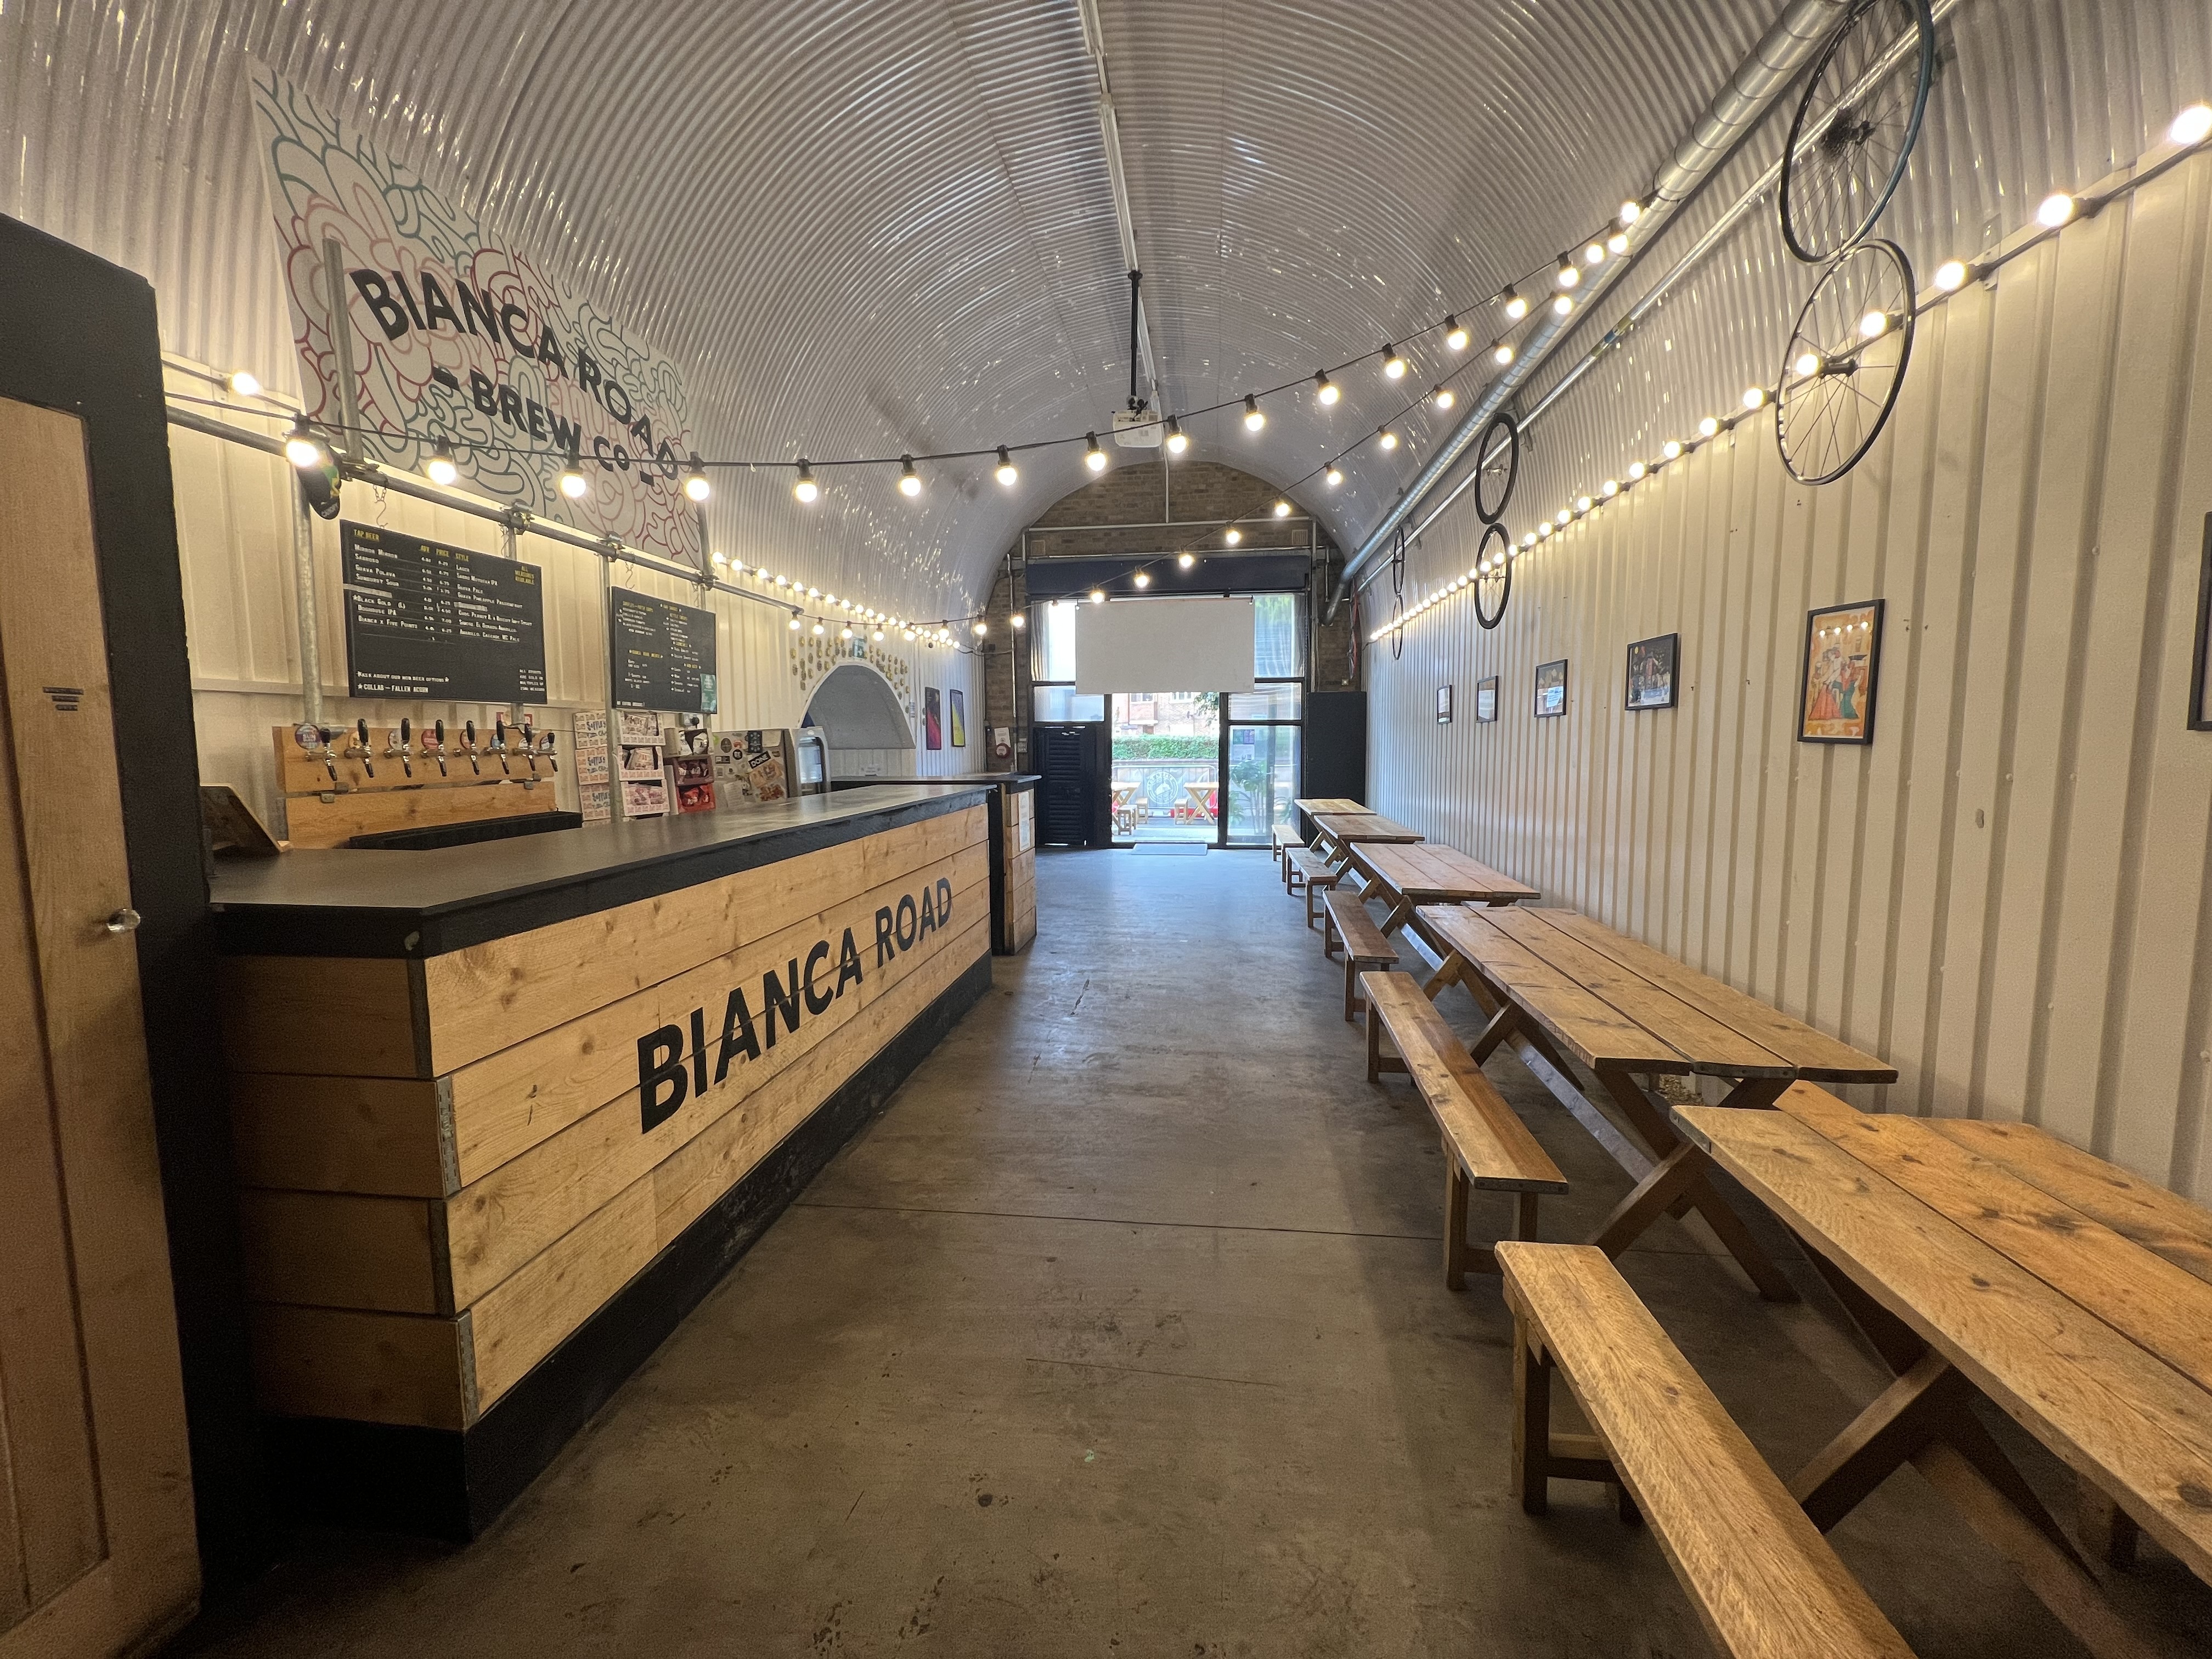 Campino – Bianca Road Brew Co